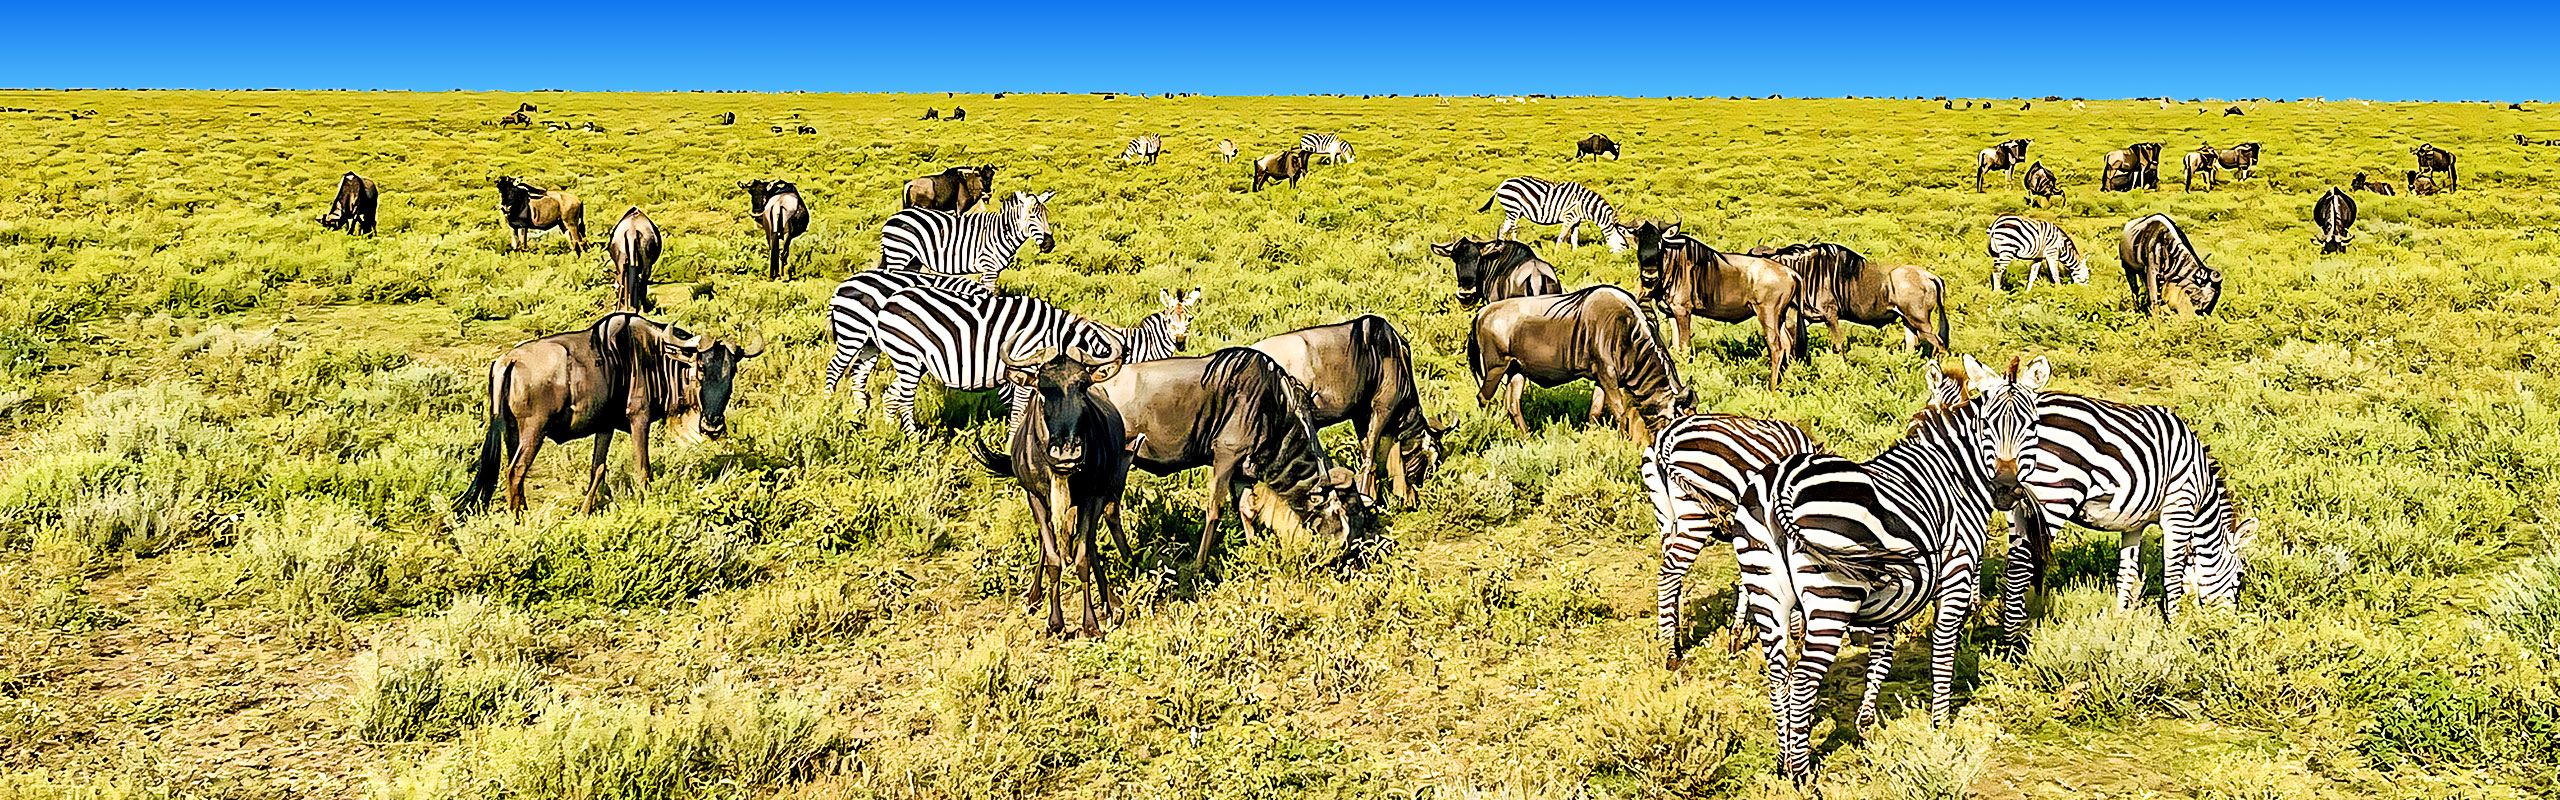 Zebras Flock in Africa